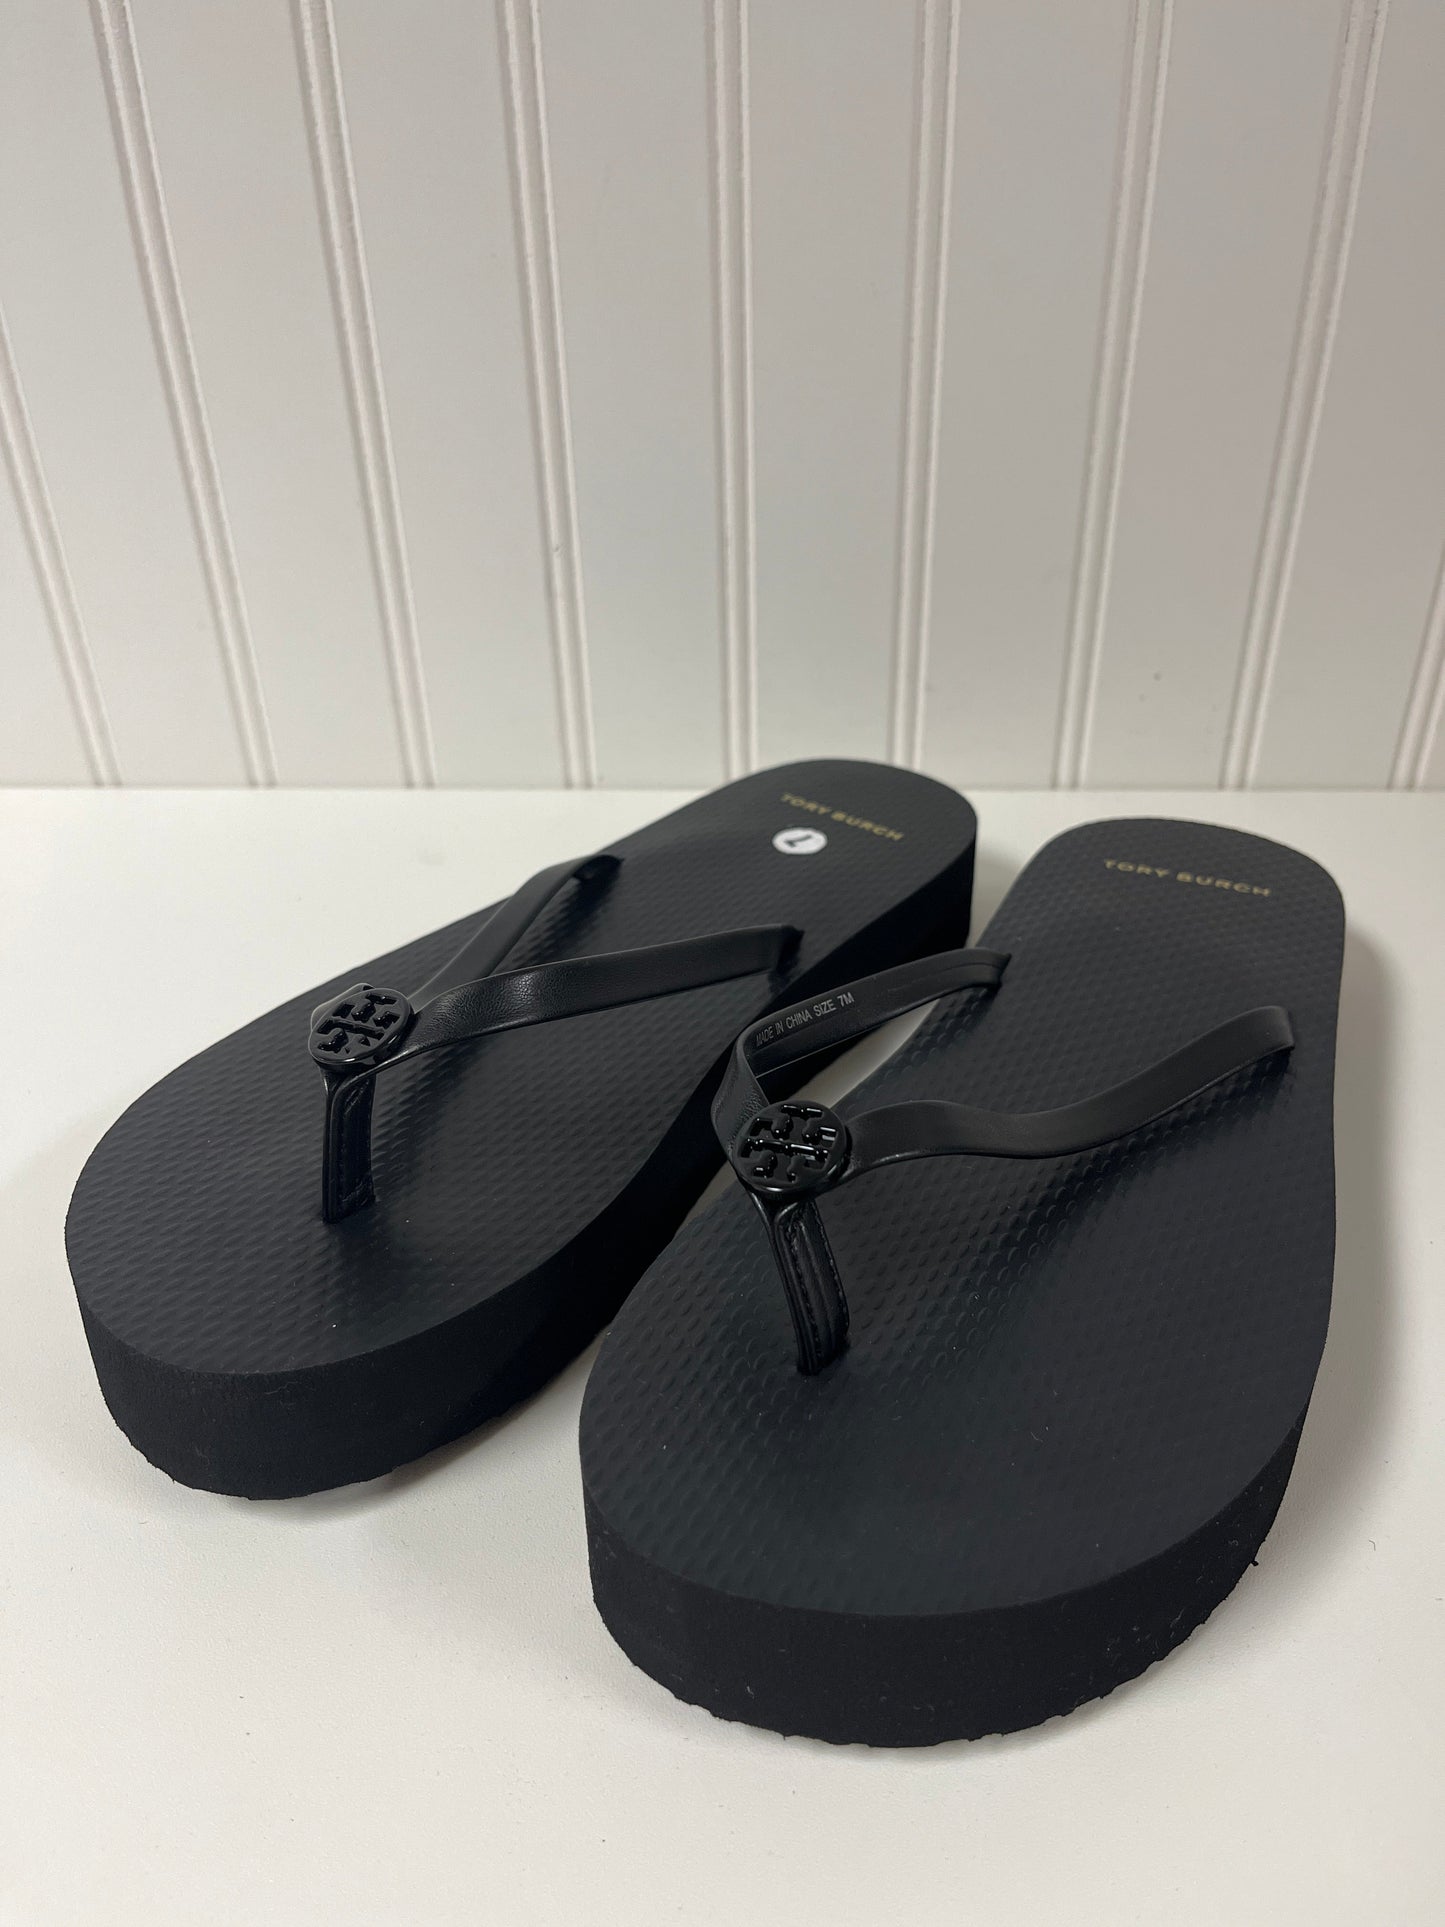 Black Sandals Designer Tory Burch, Size 7